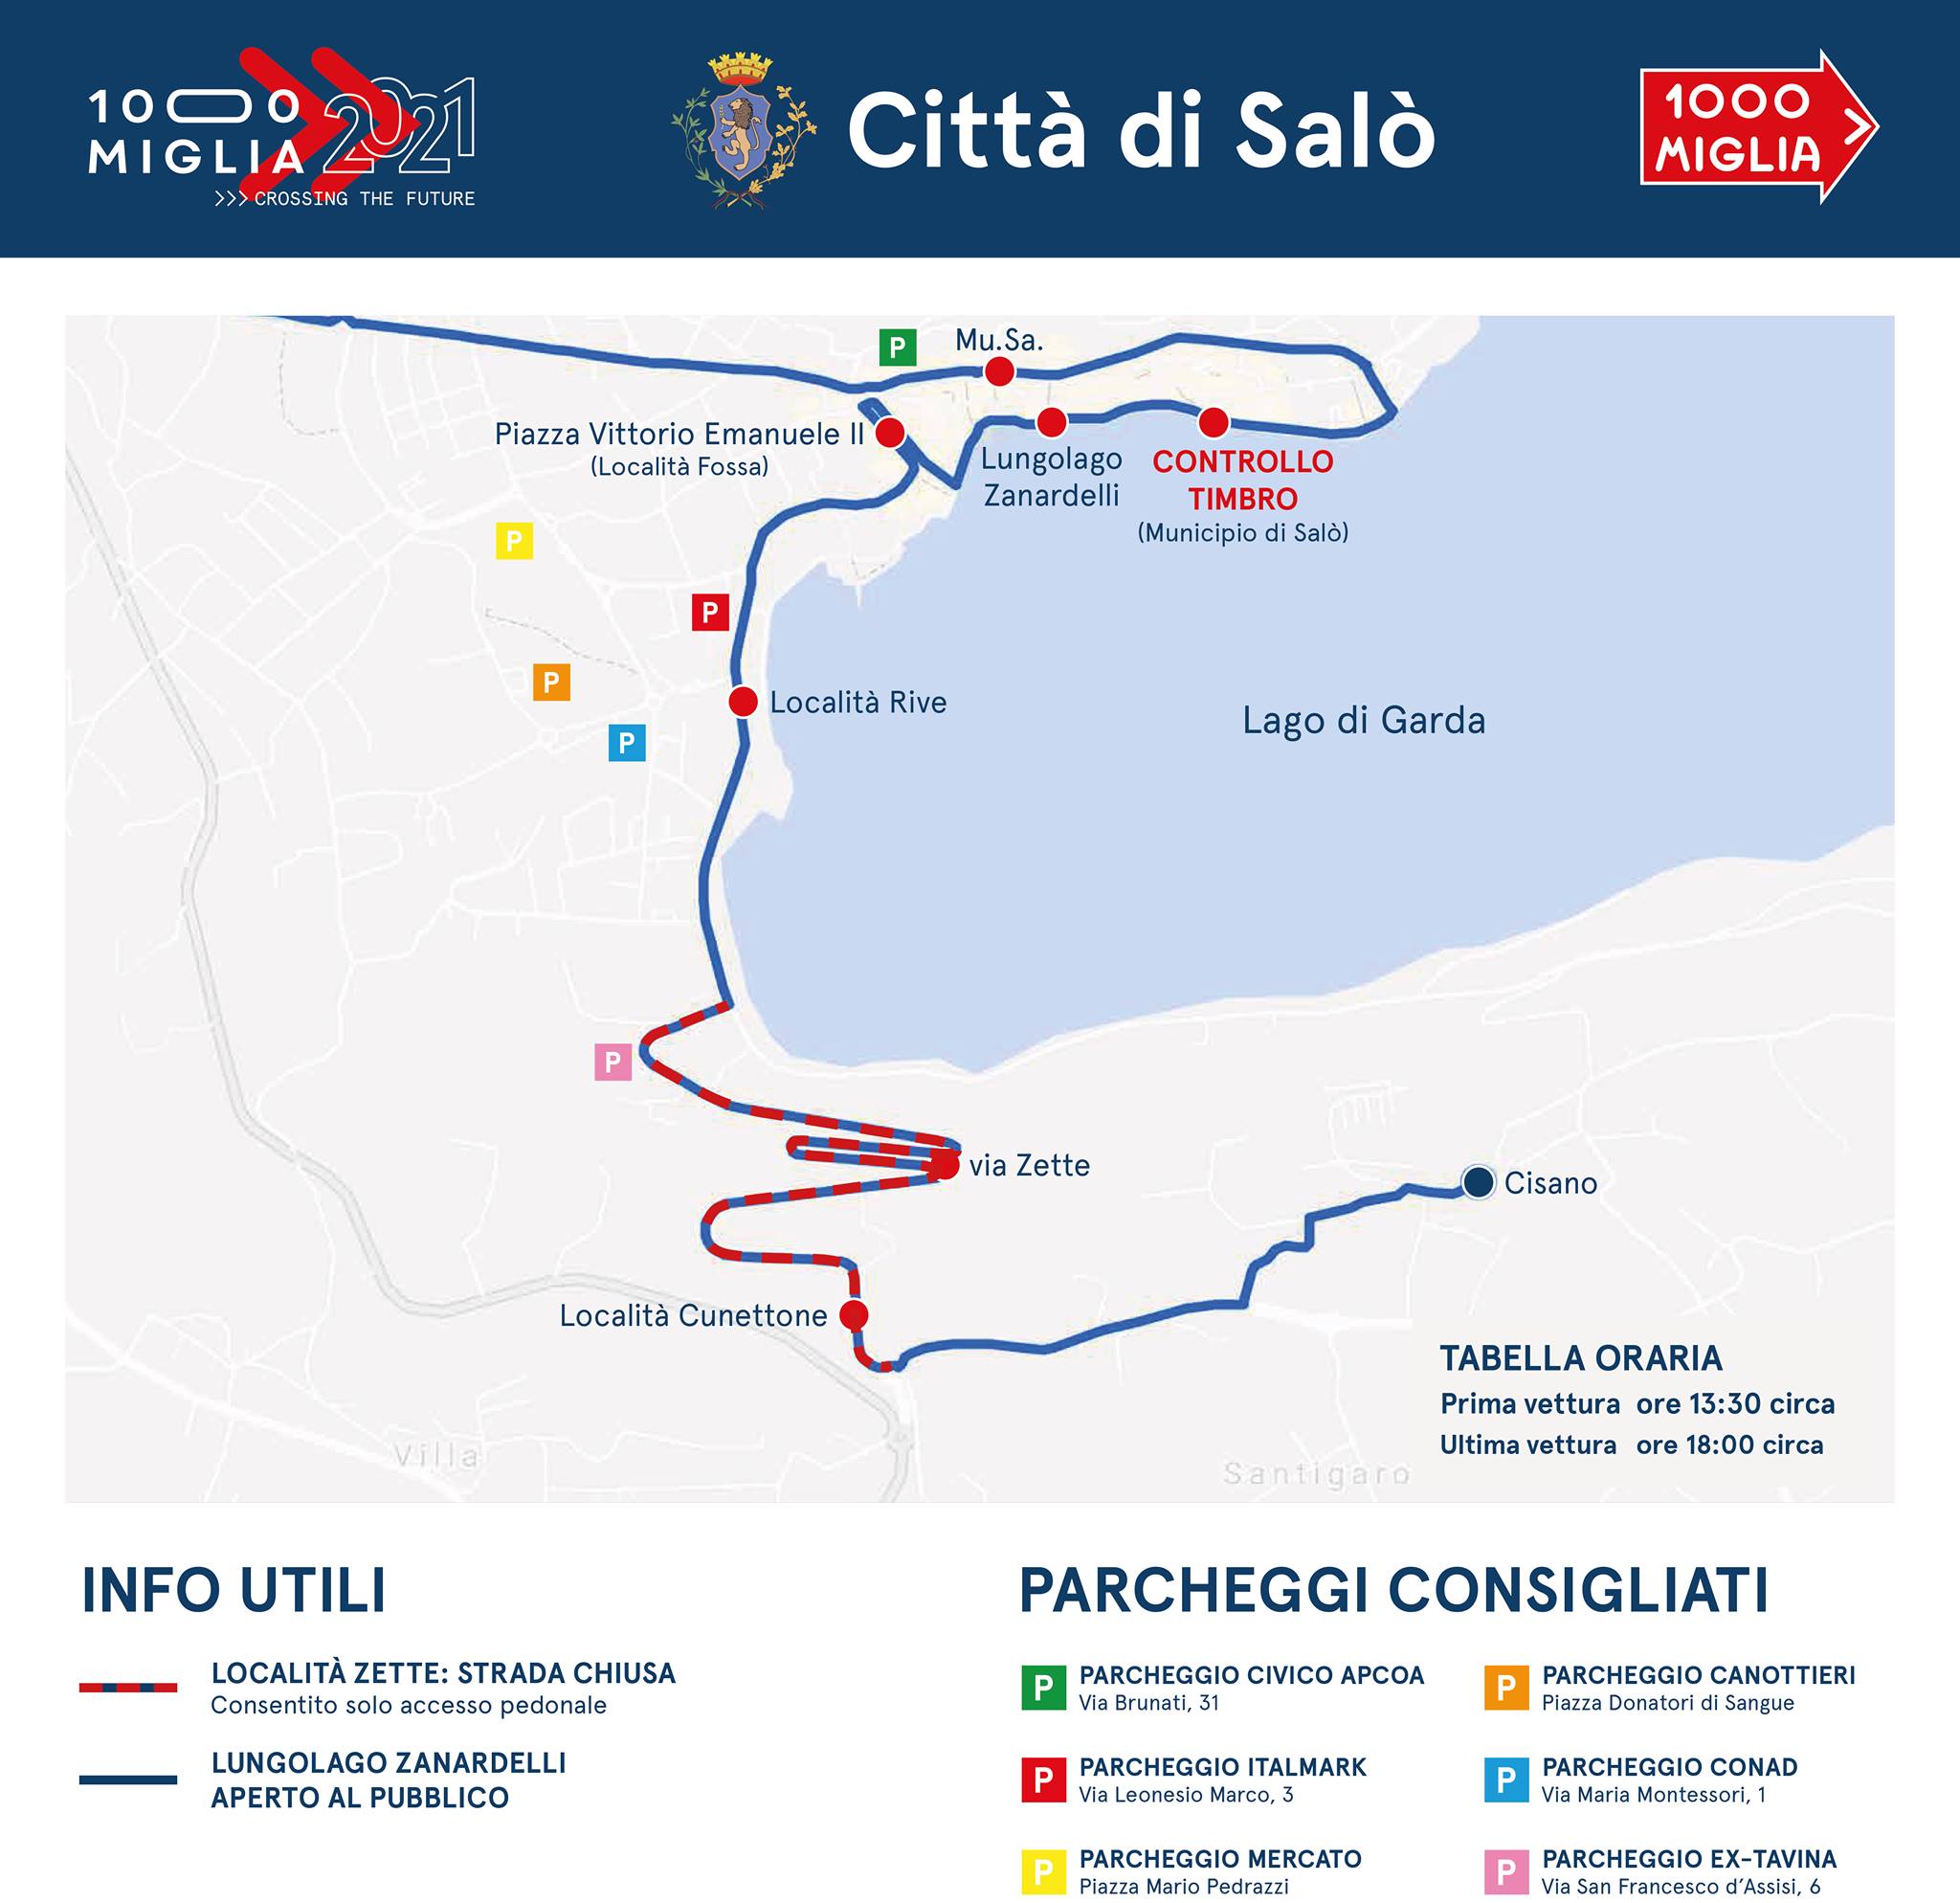 Millemiglia 2021 - 19th June the race arrive in Salo